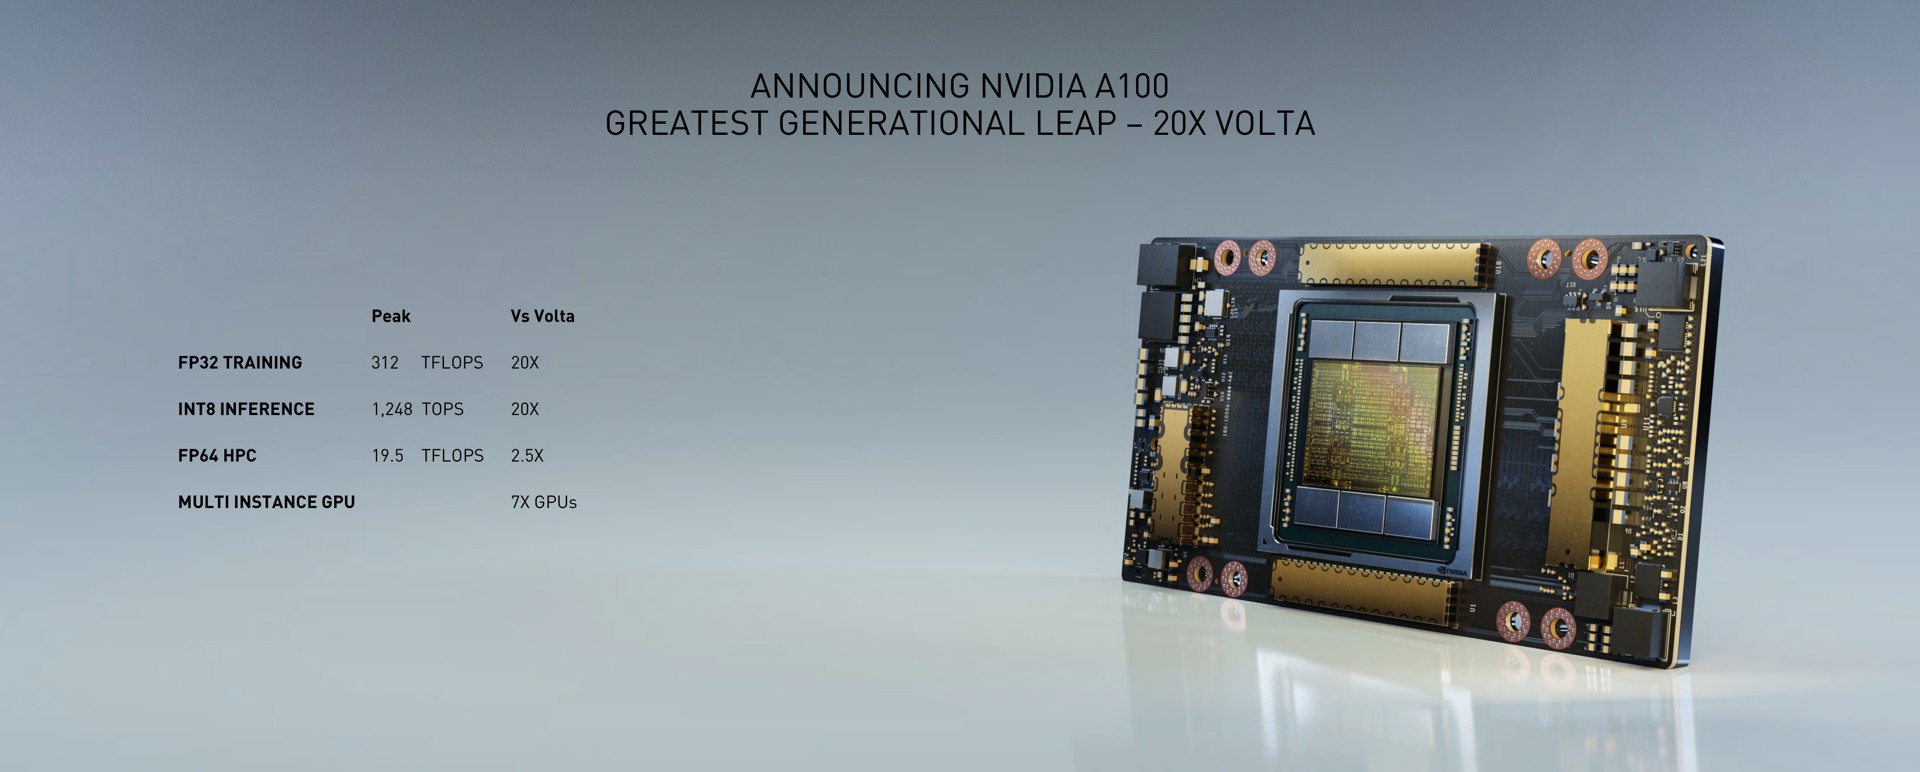 announcing a generational leap | NVIDIA